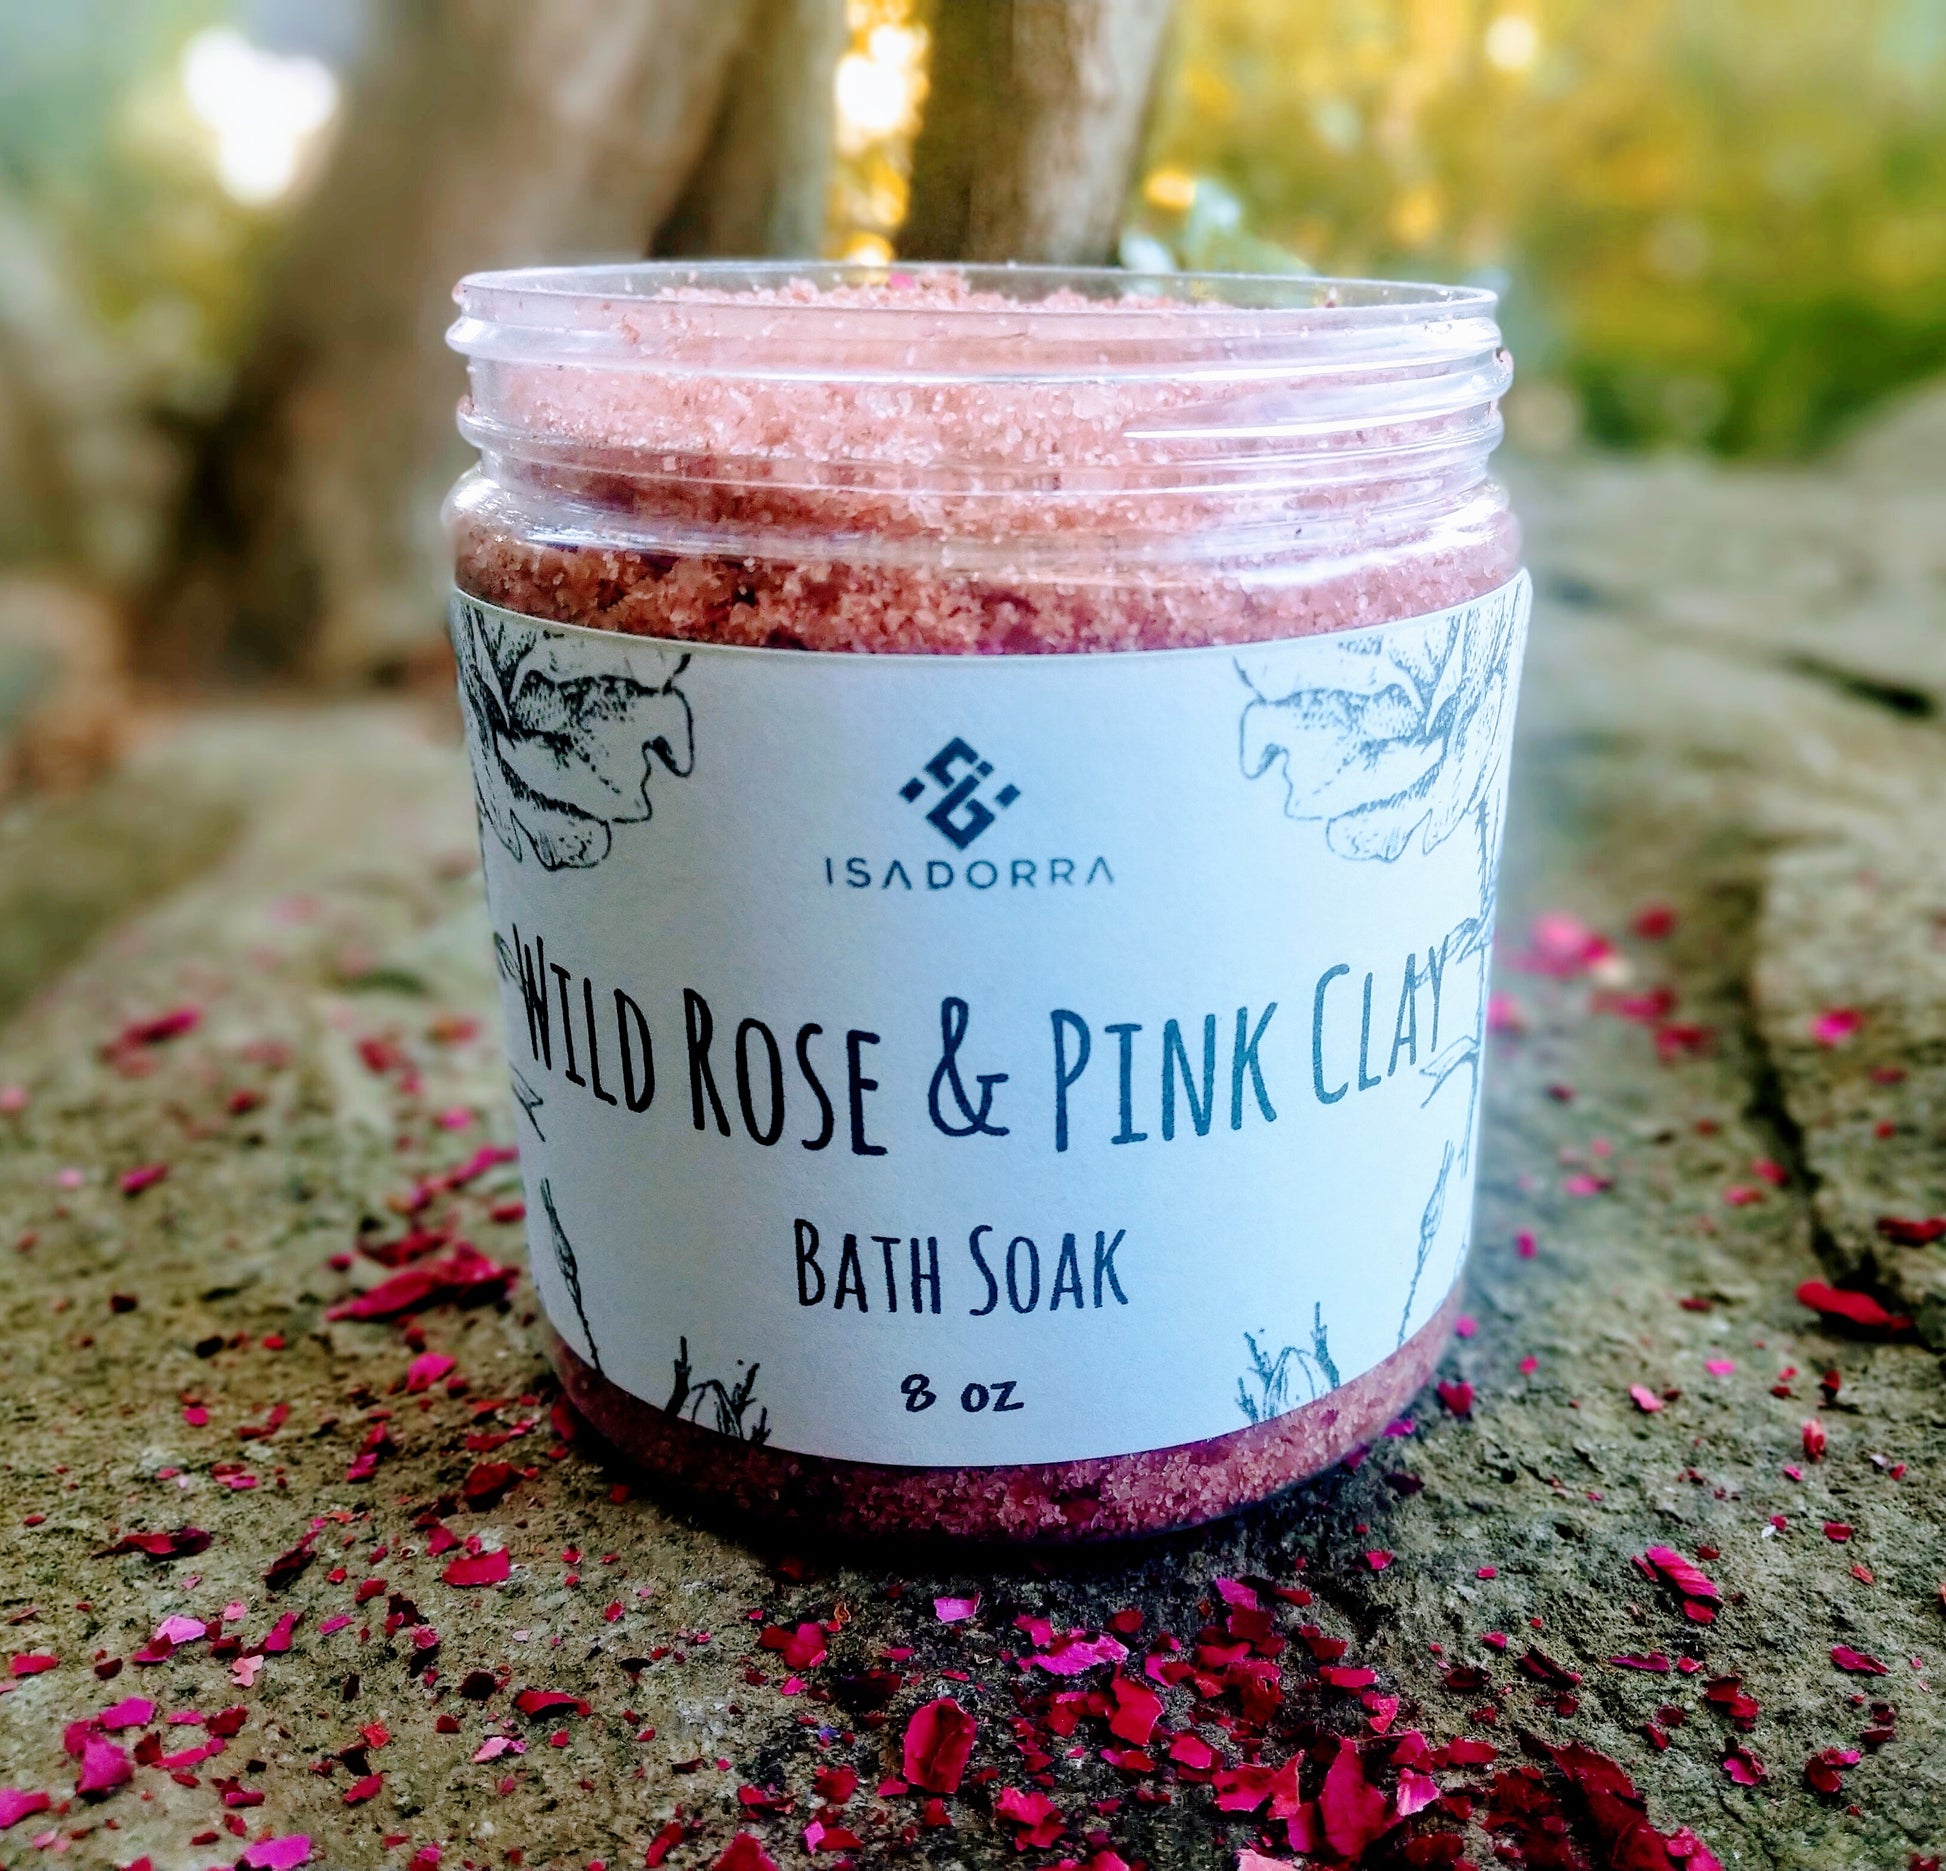 Wild Rose and Pink Clay Bath Soak - Isadorra